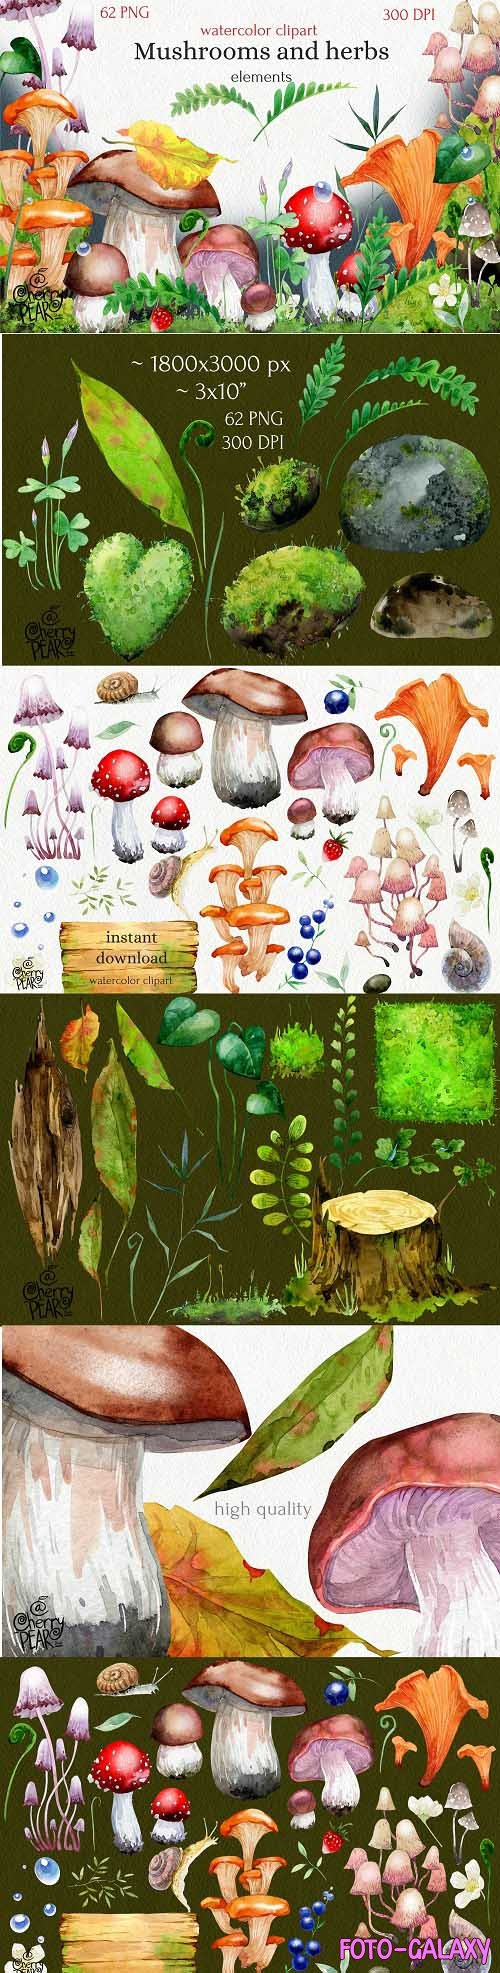 Watercolor cliparts of mushrooms and herbs, individual PNG - 1473824